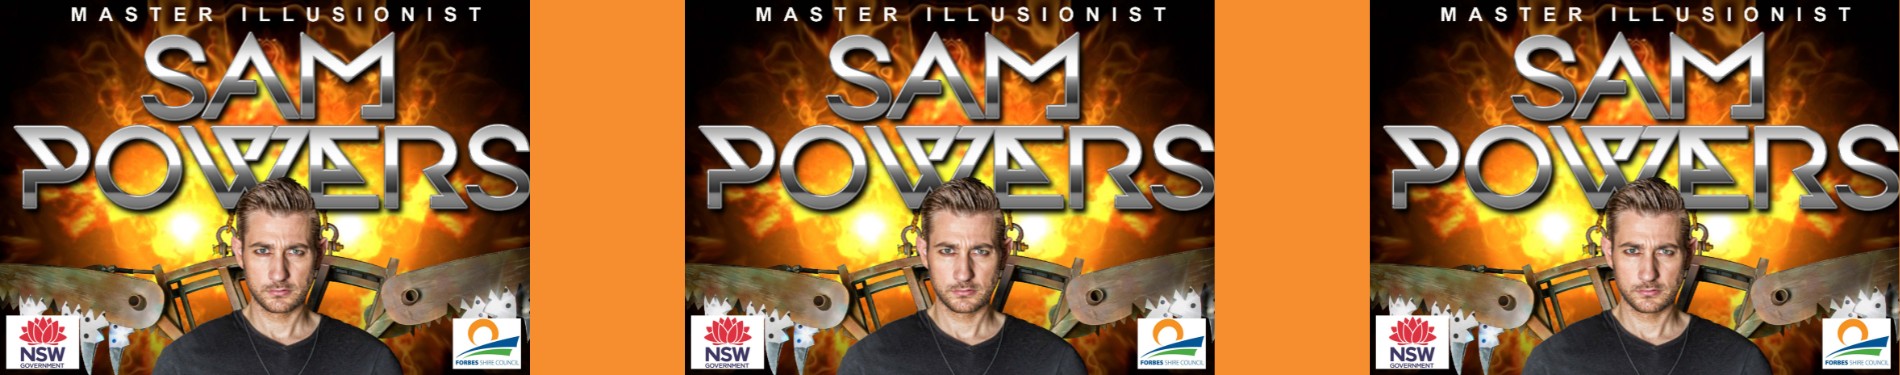 Illusion Spectacular starring Sam Powers, Master Illusionist